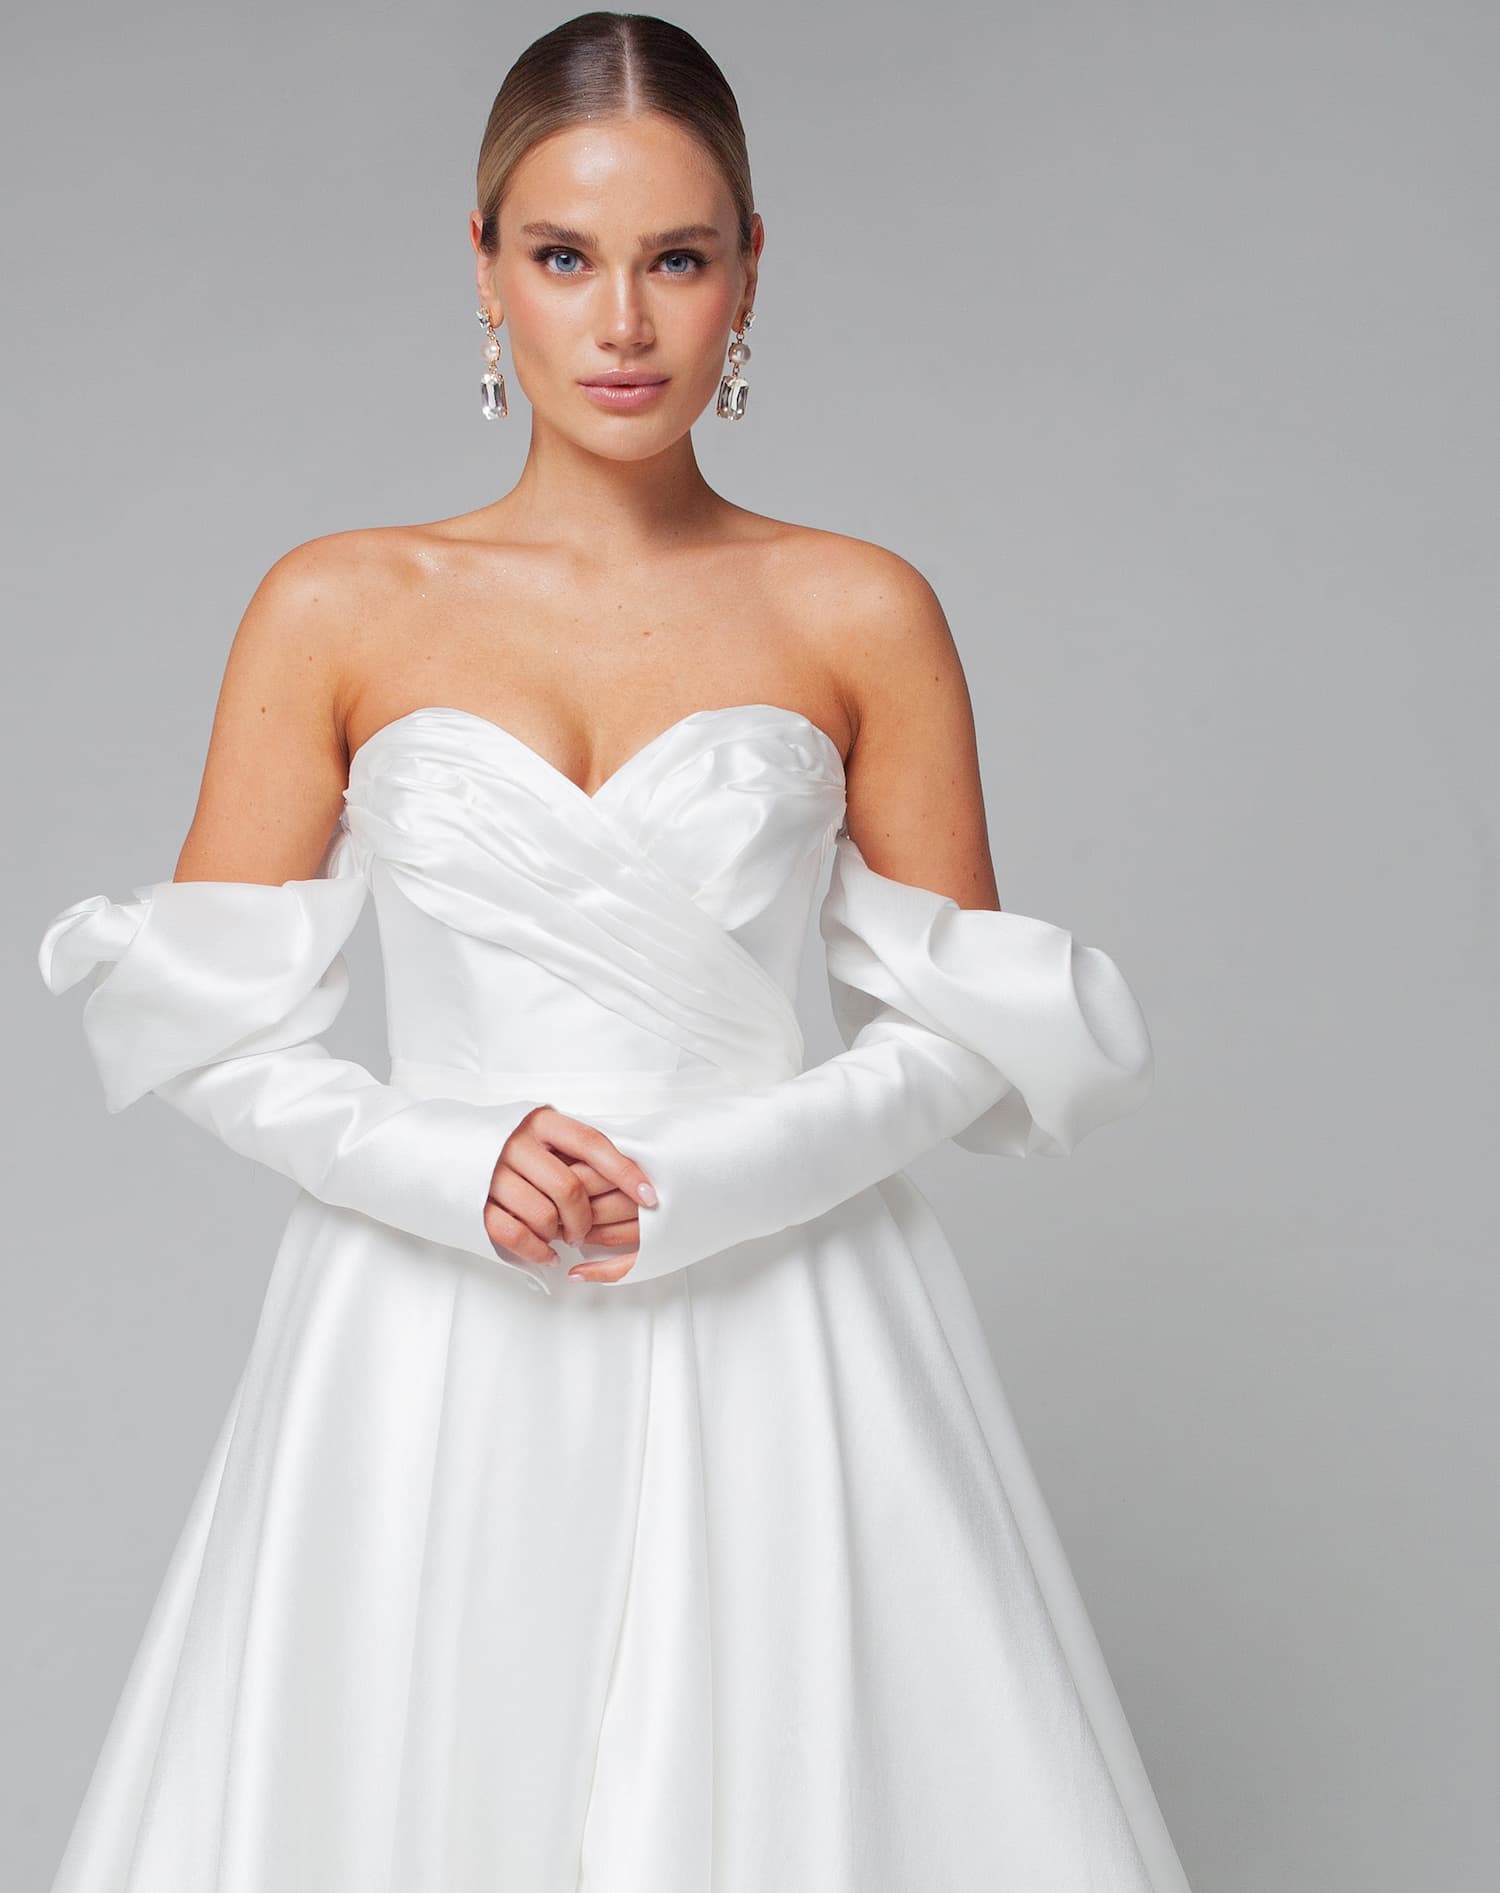 Rara Avis elegant satin wedding dress Missouri with detachable long sleeves at Dell'Amore Bridal, NZ 4